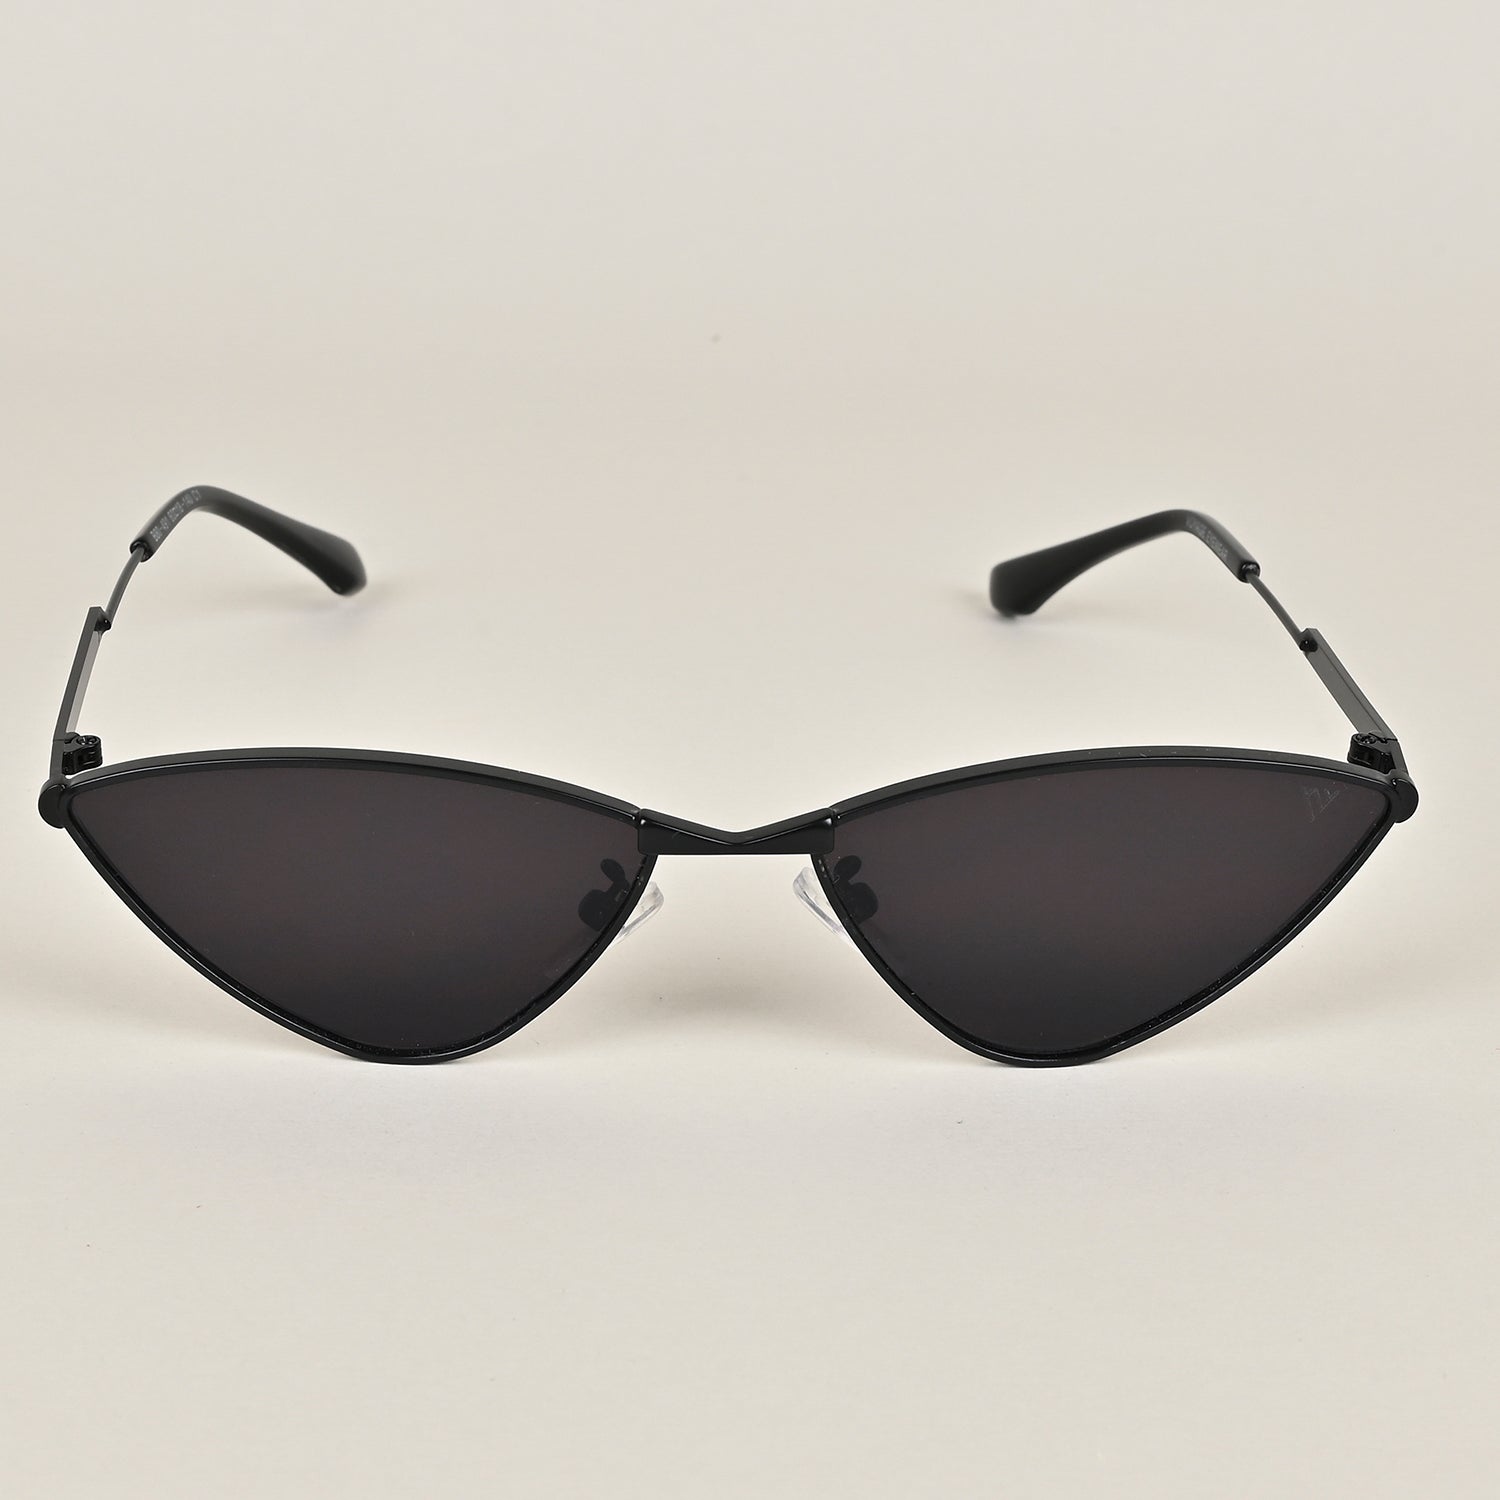 Voyage Black Cateye Sunglasses MG3437